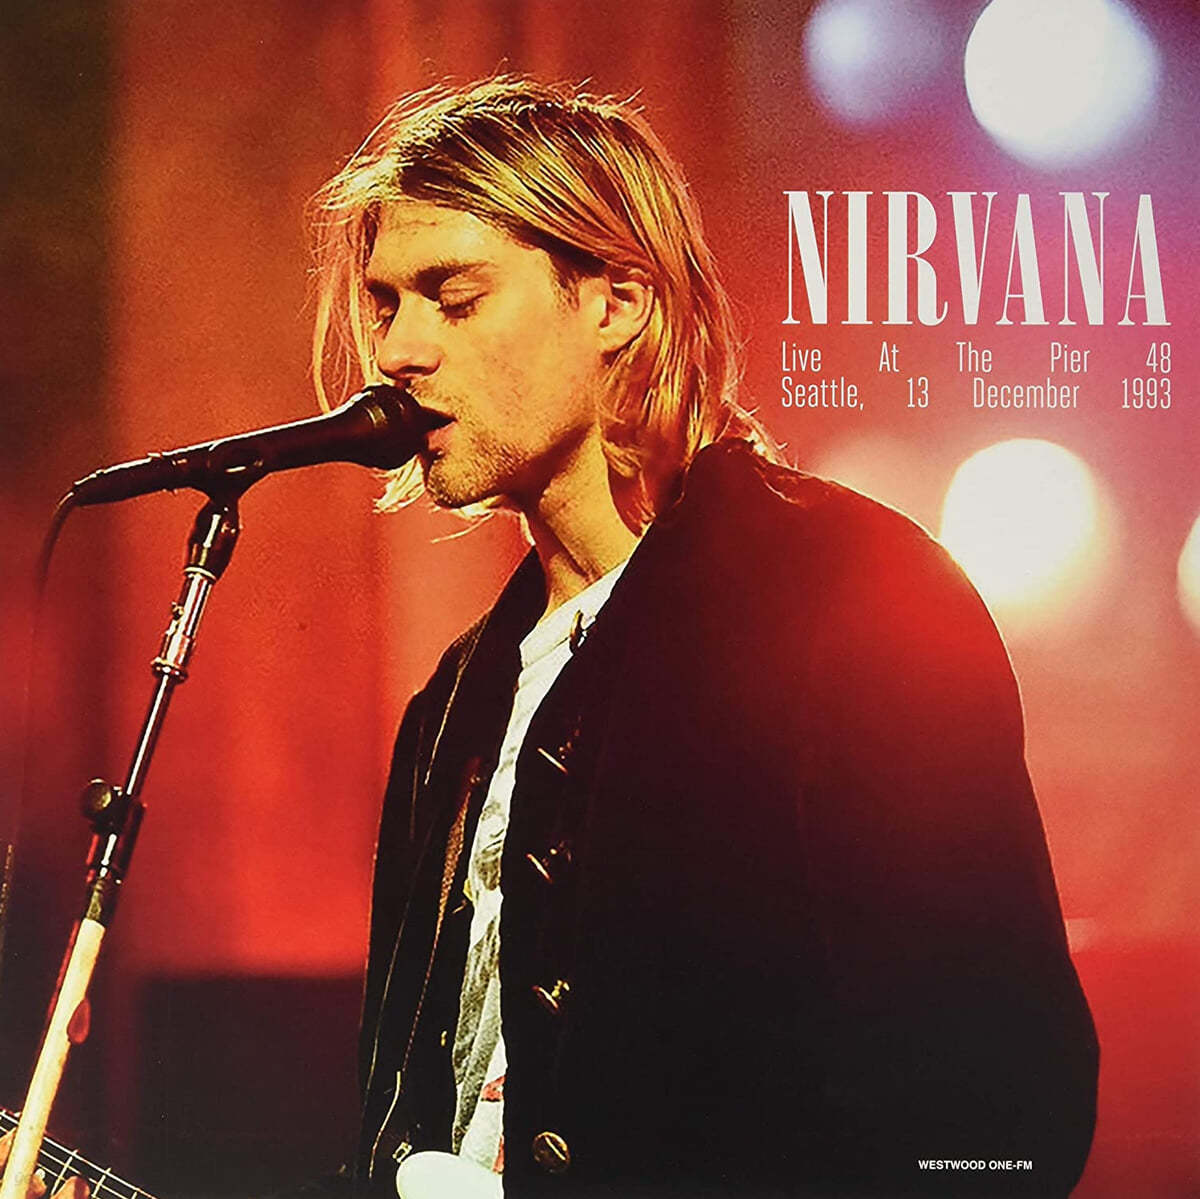 Nirvana (너바나) - Live at The Pier 48 Seattle 13 December 1993 [LP] 